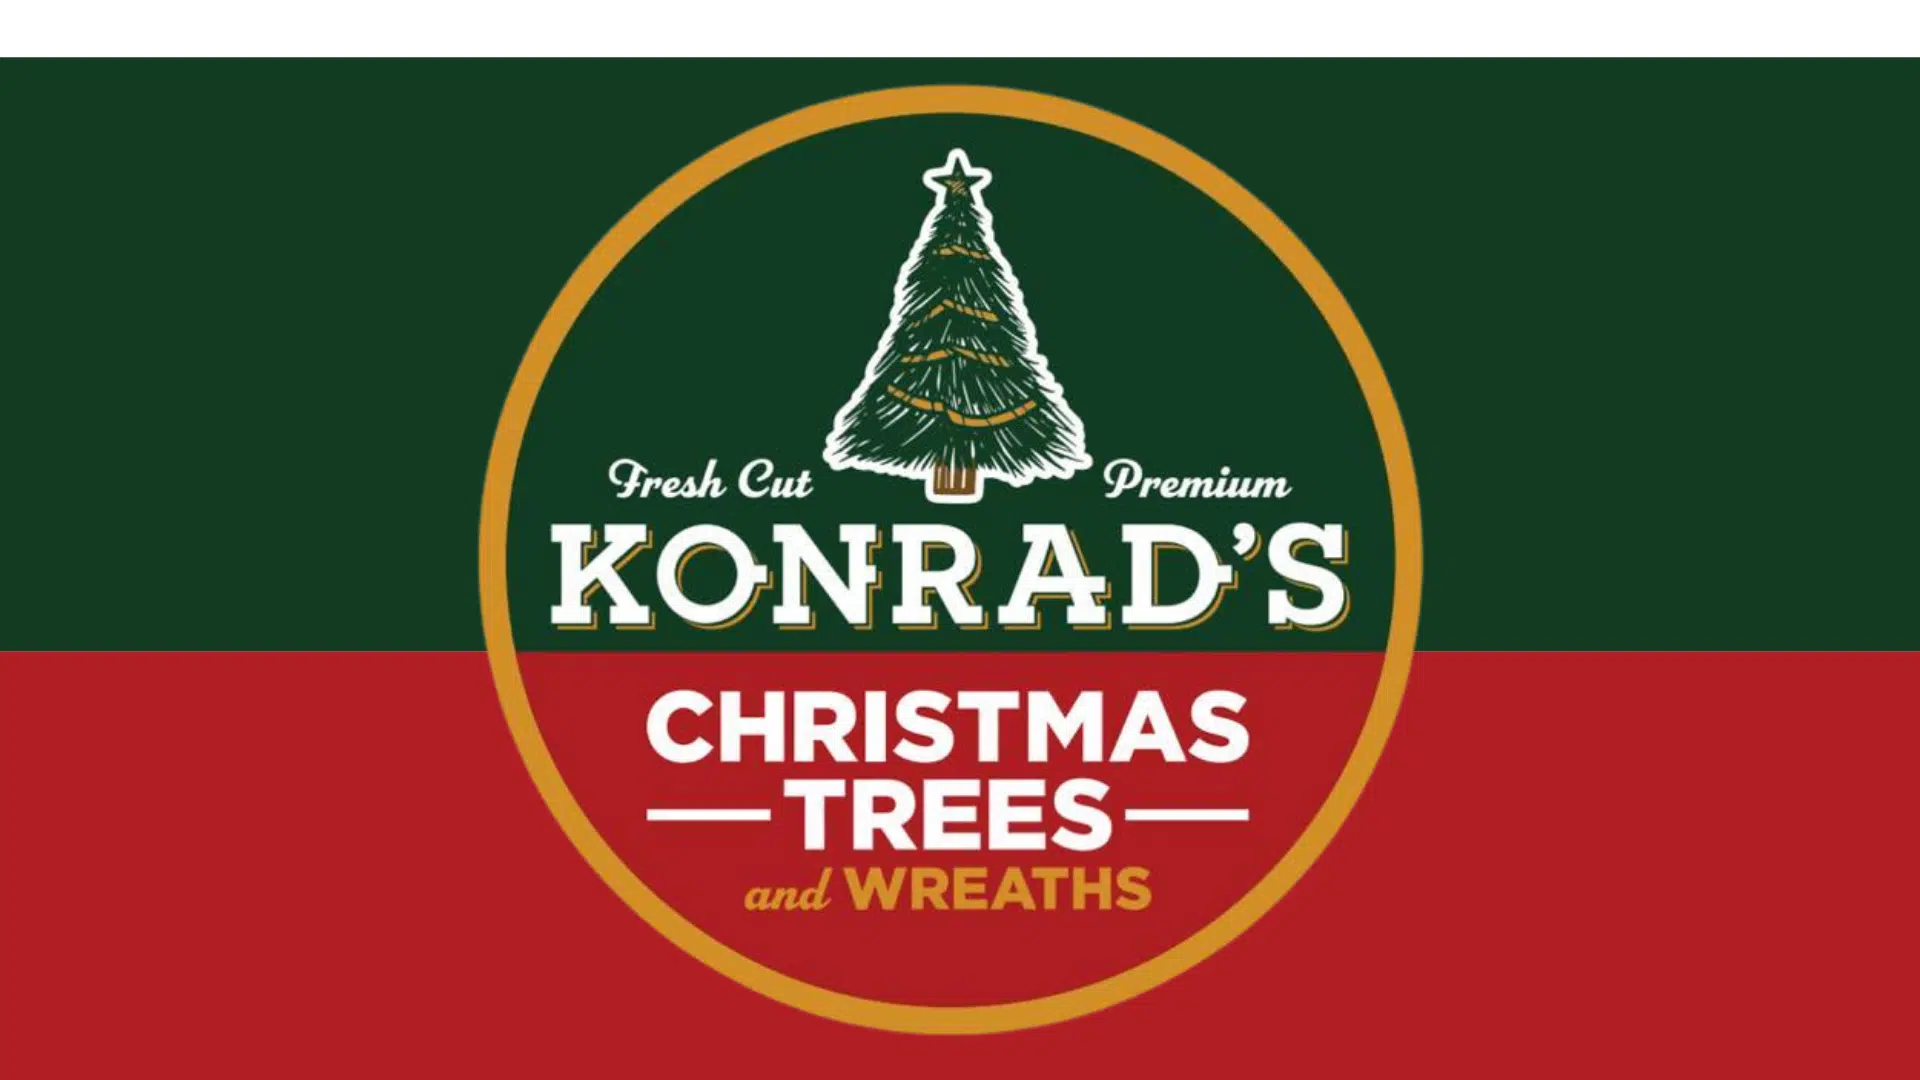 Konrad's Christmas Trees and Wreaths Georgetown TX